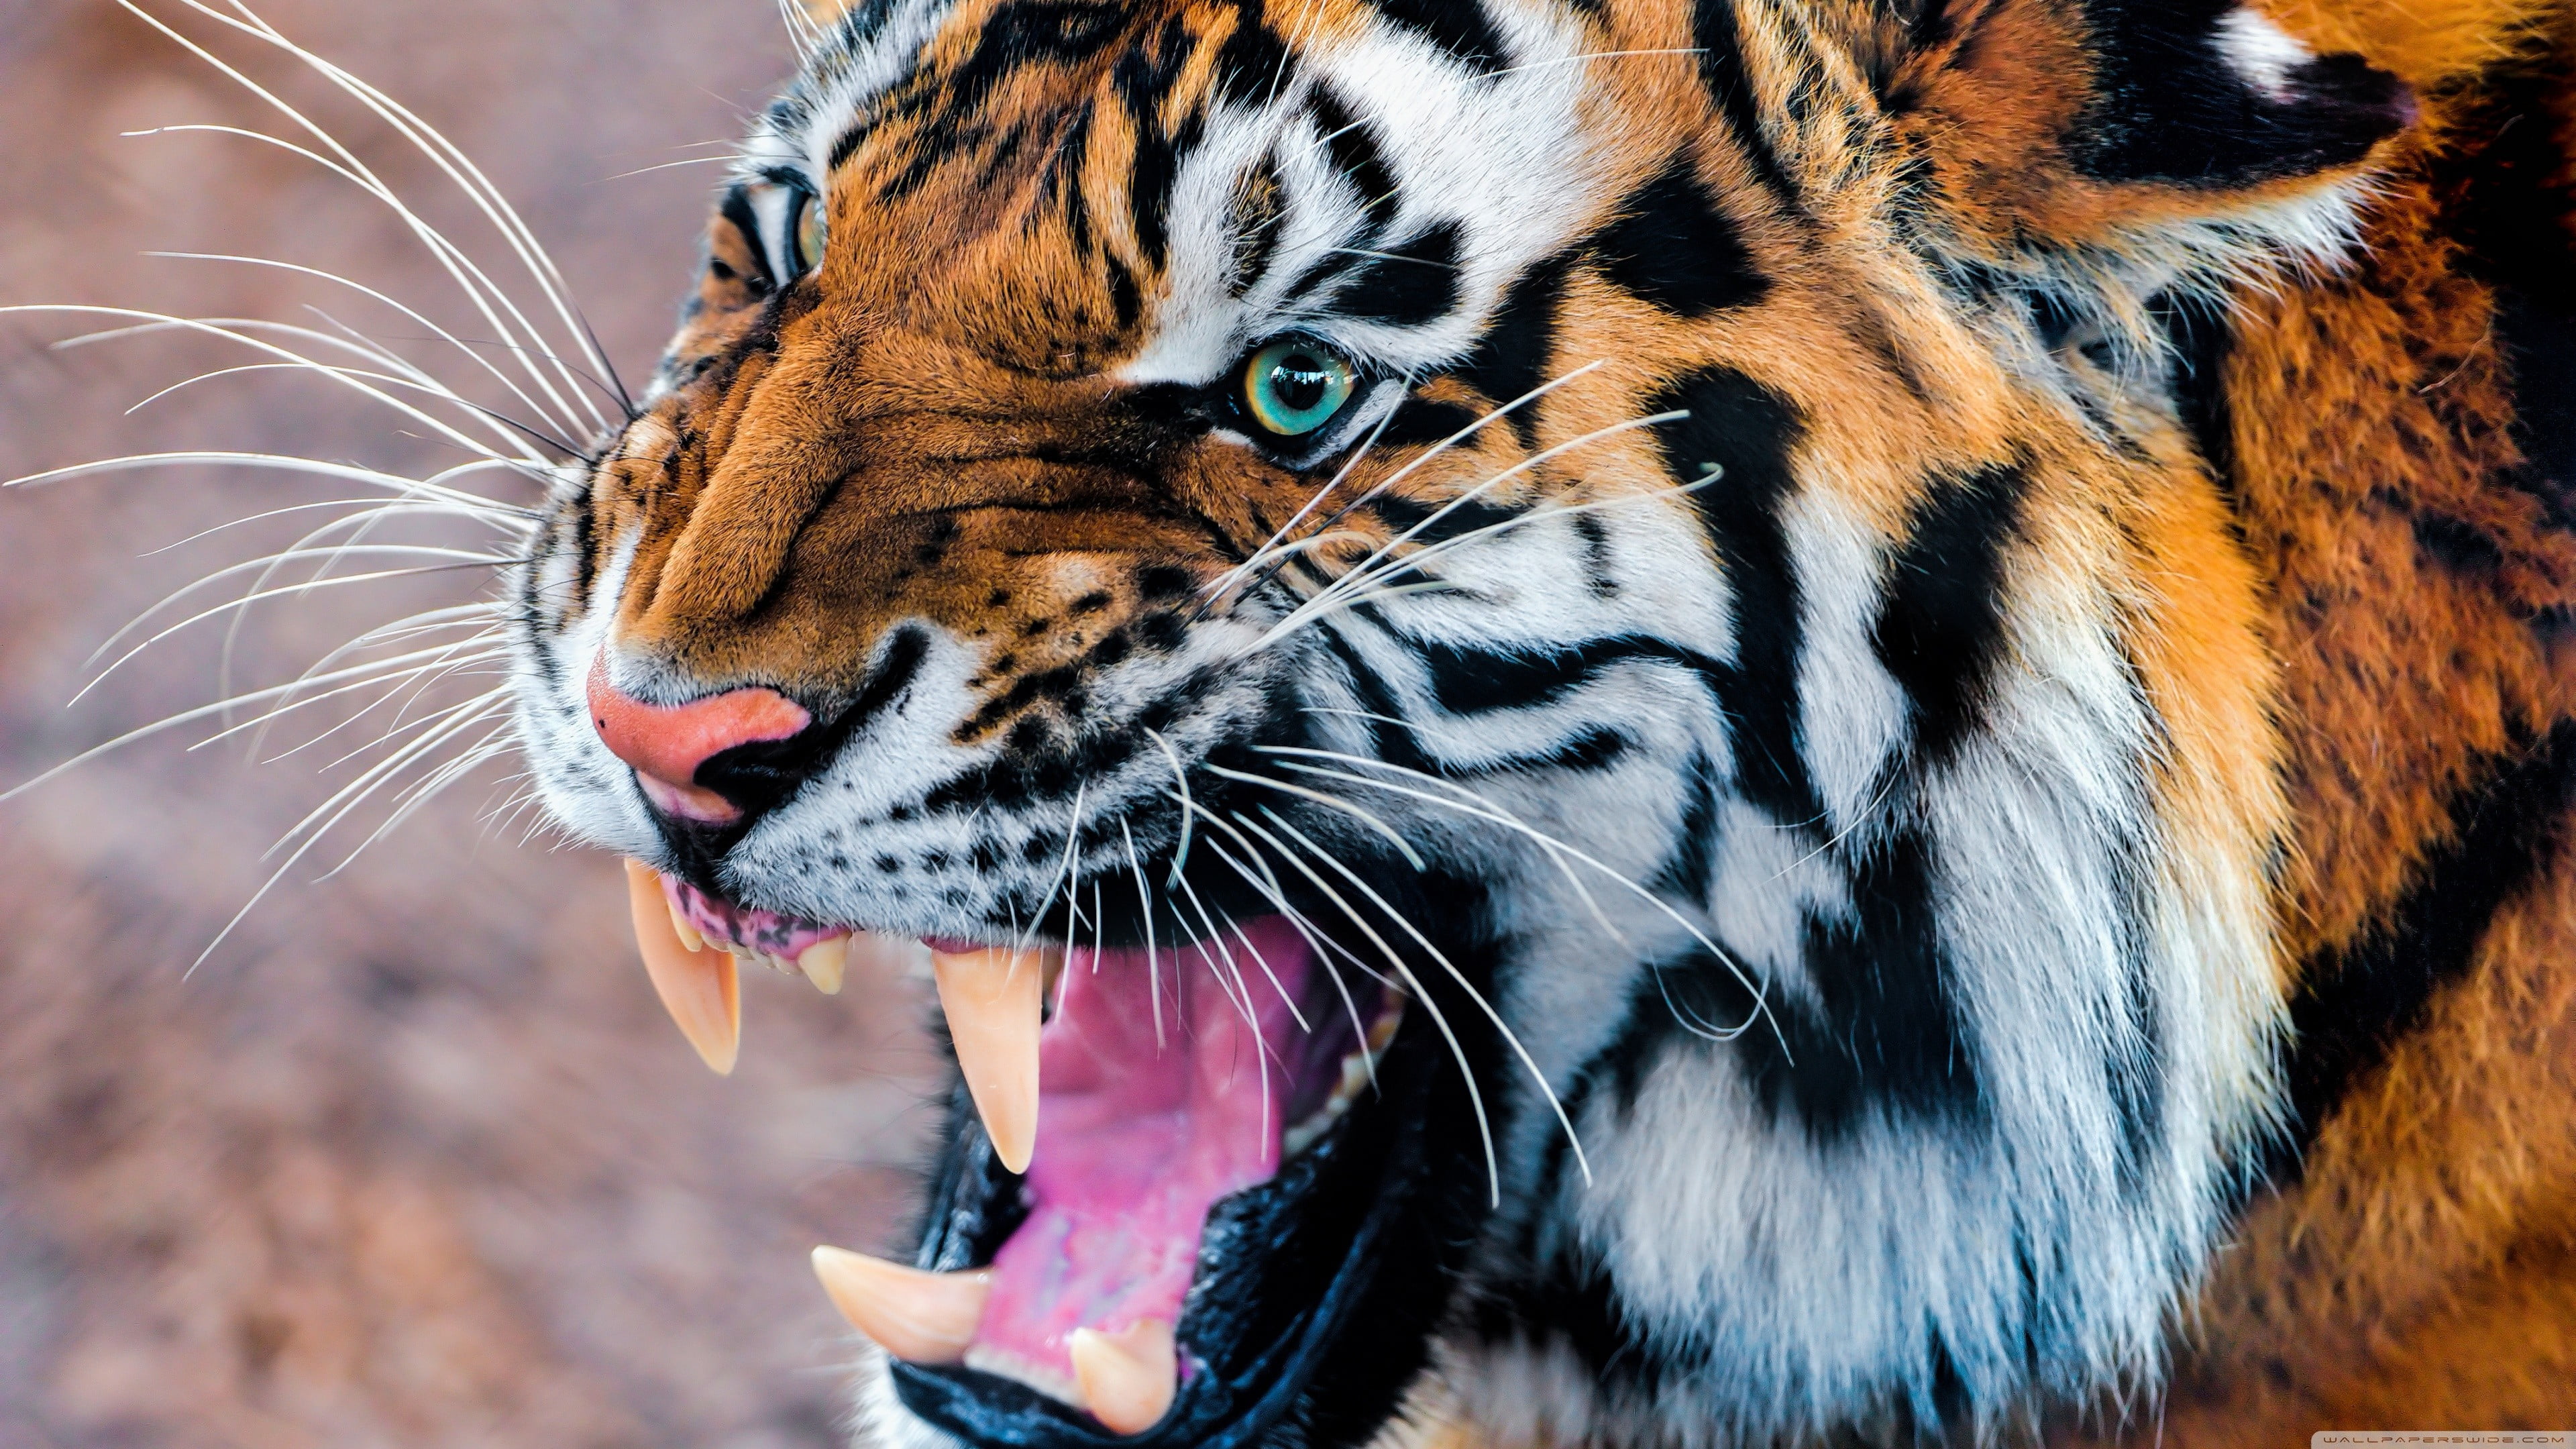 Bengal tiger, animals, roar, wildlife, carnivore, striped, undomesticated Cat